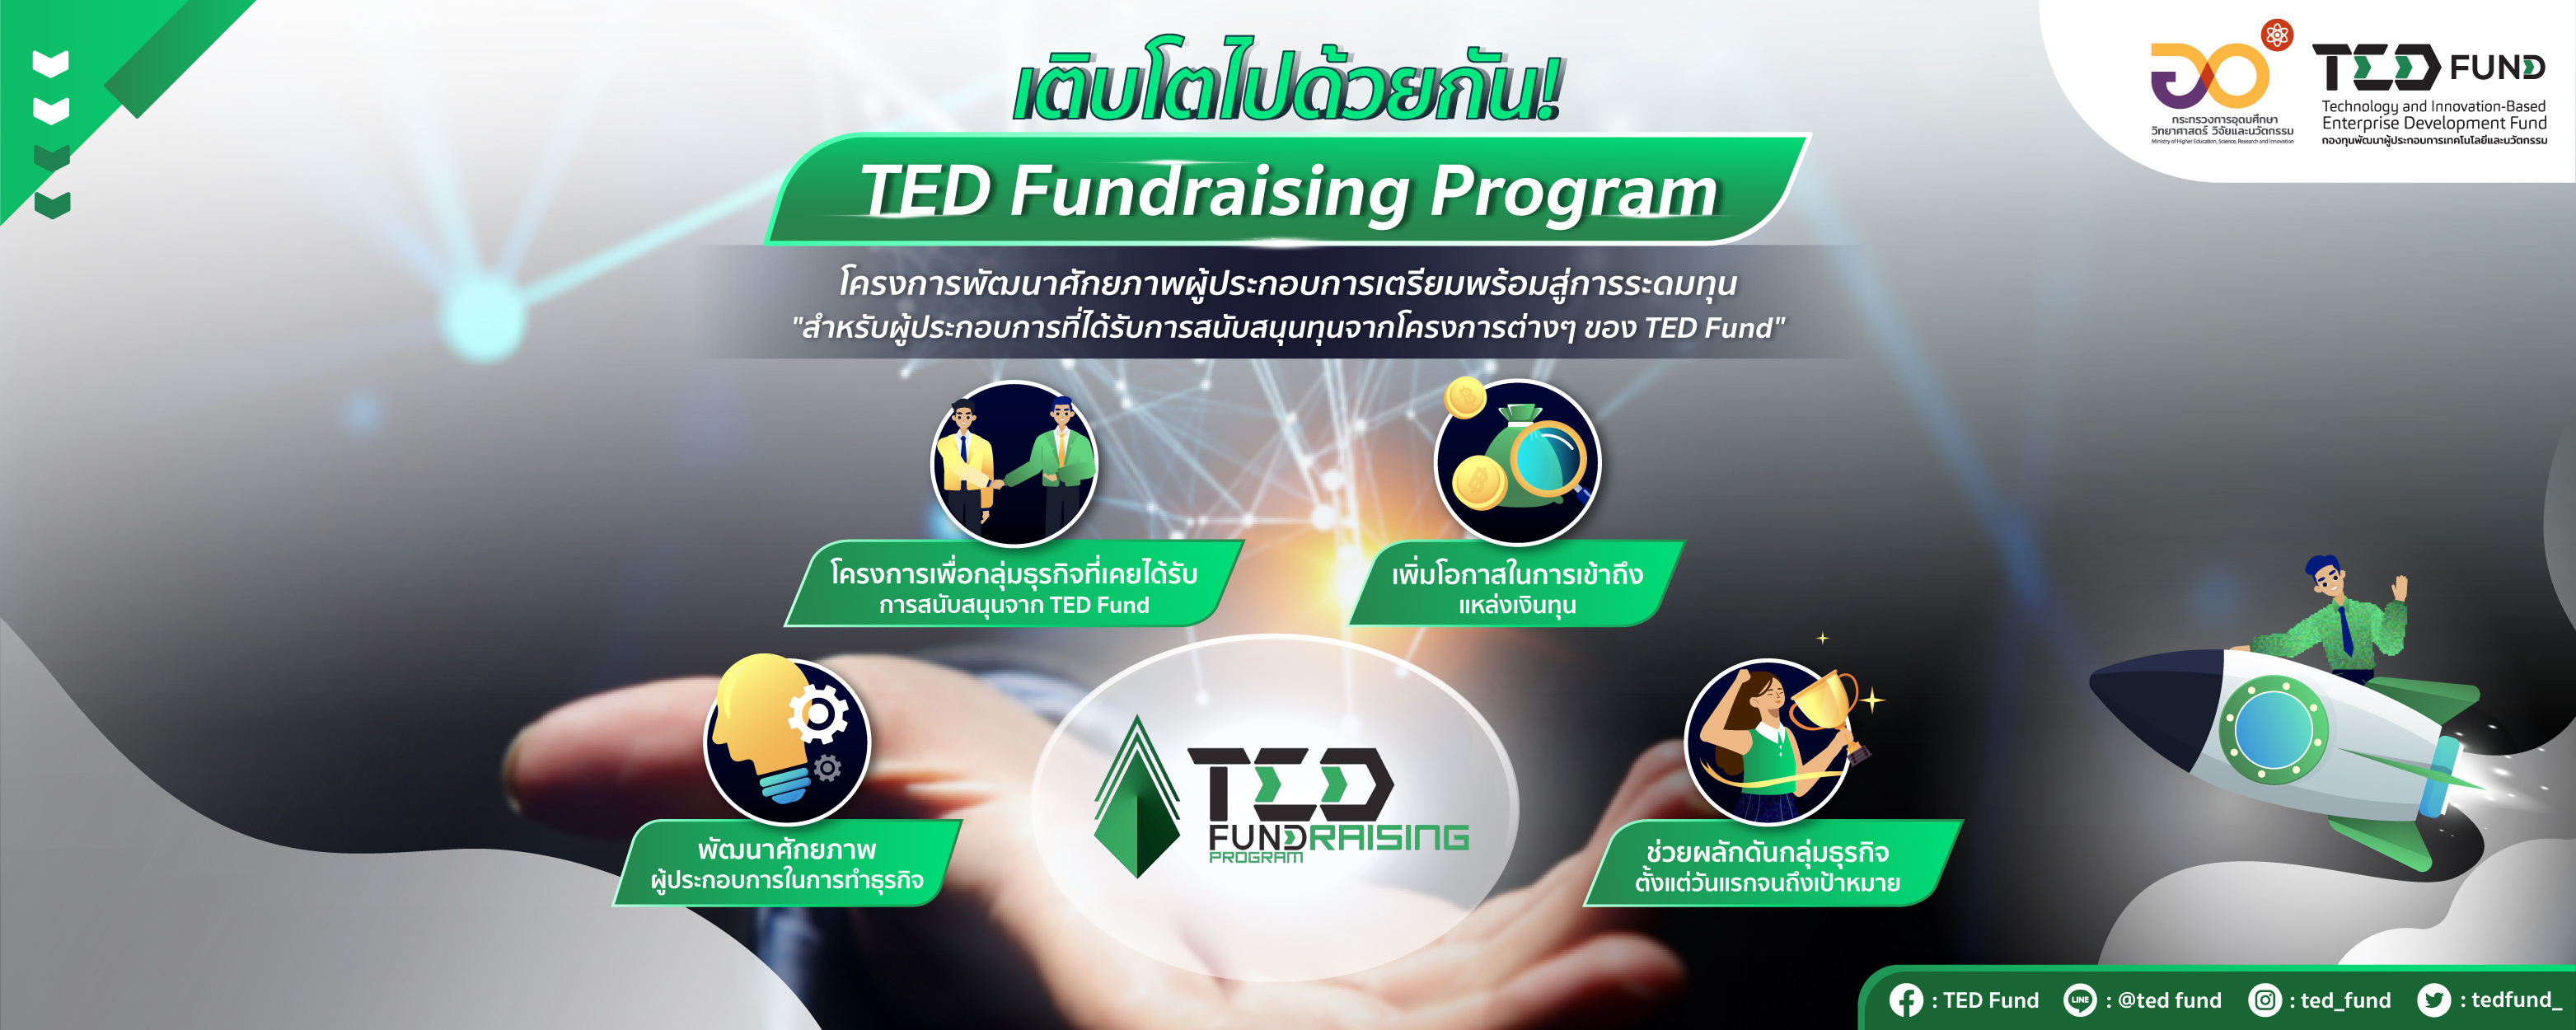 TED Fundraising Program